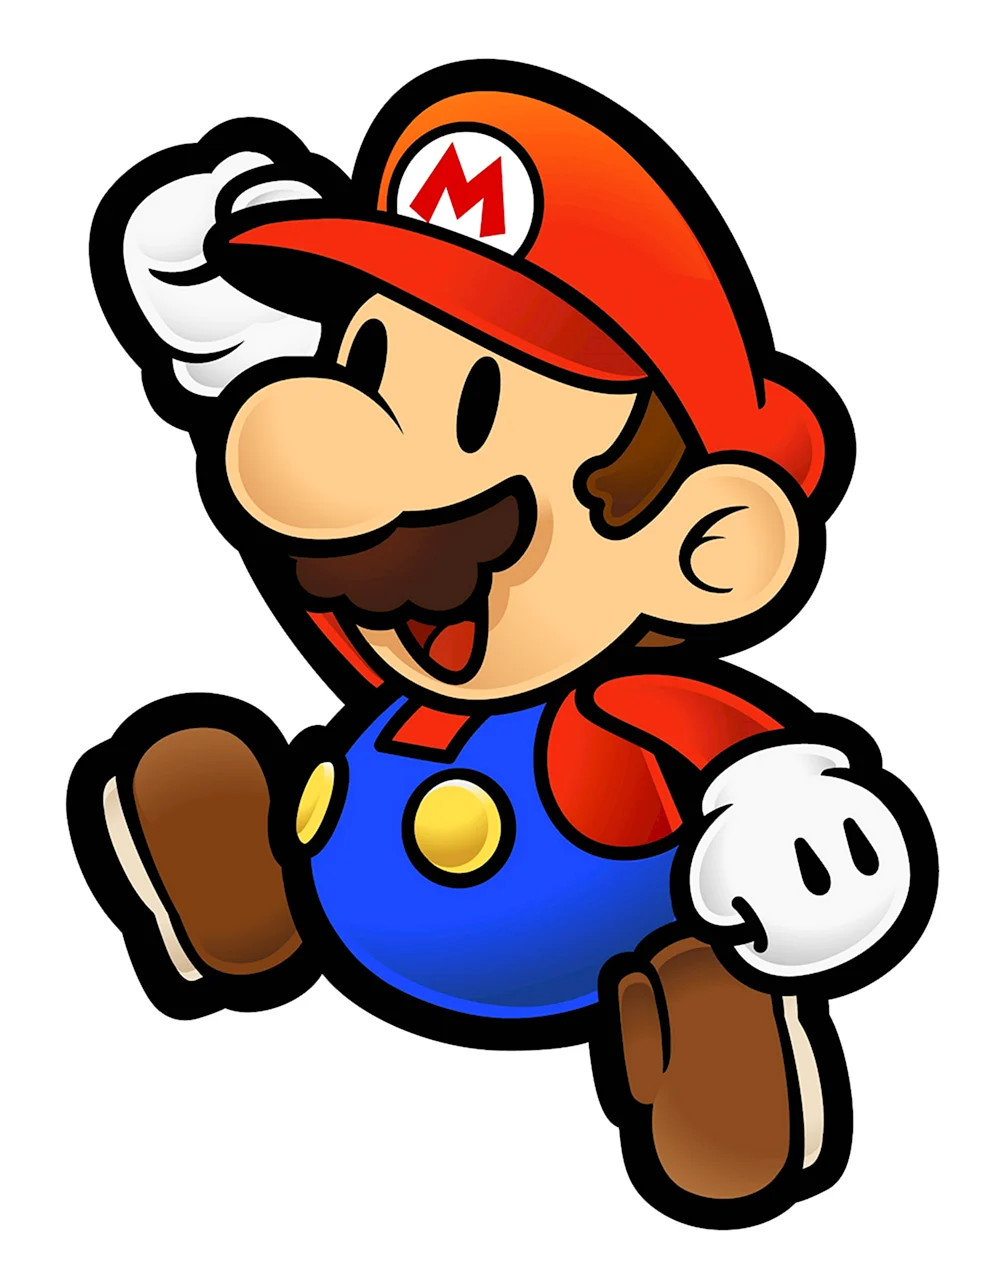 Марио персонаж игр